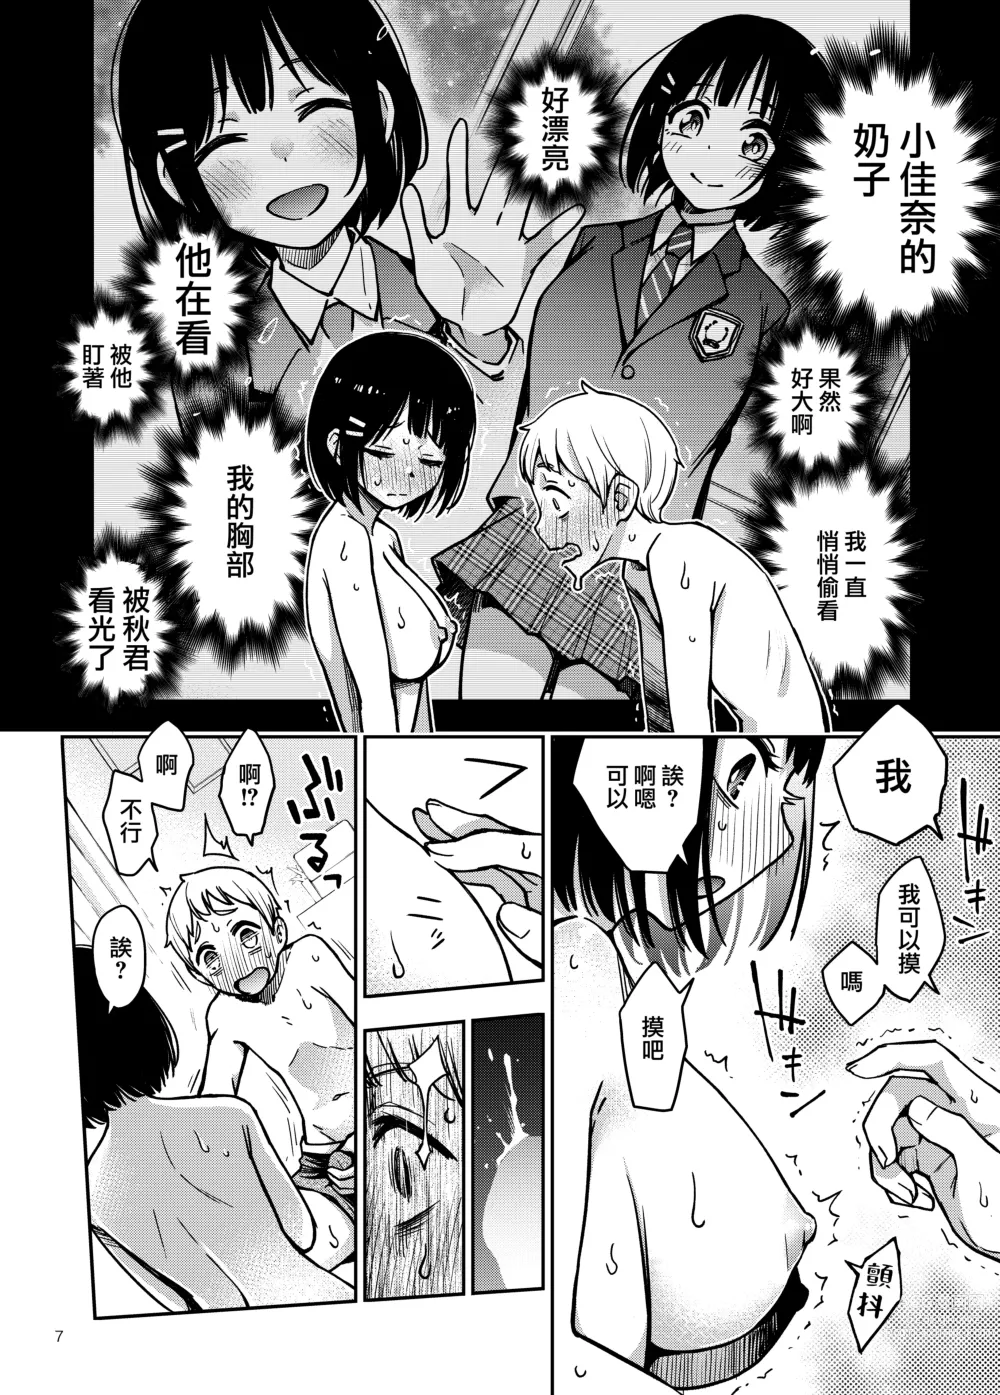 Page 7 of doujinshi 与处男初体验时觉醒的处女